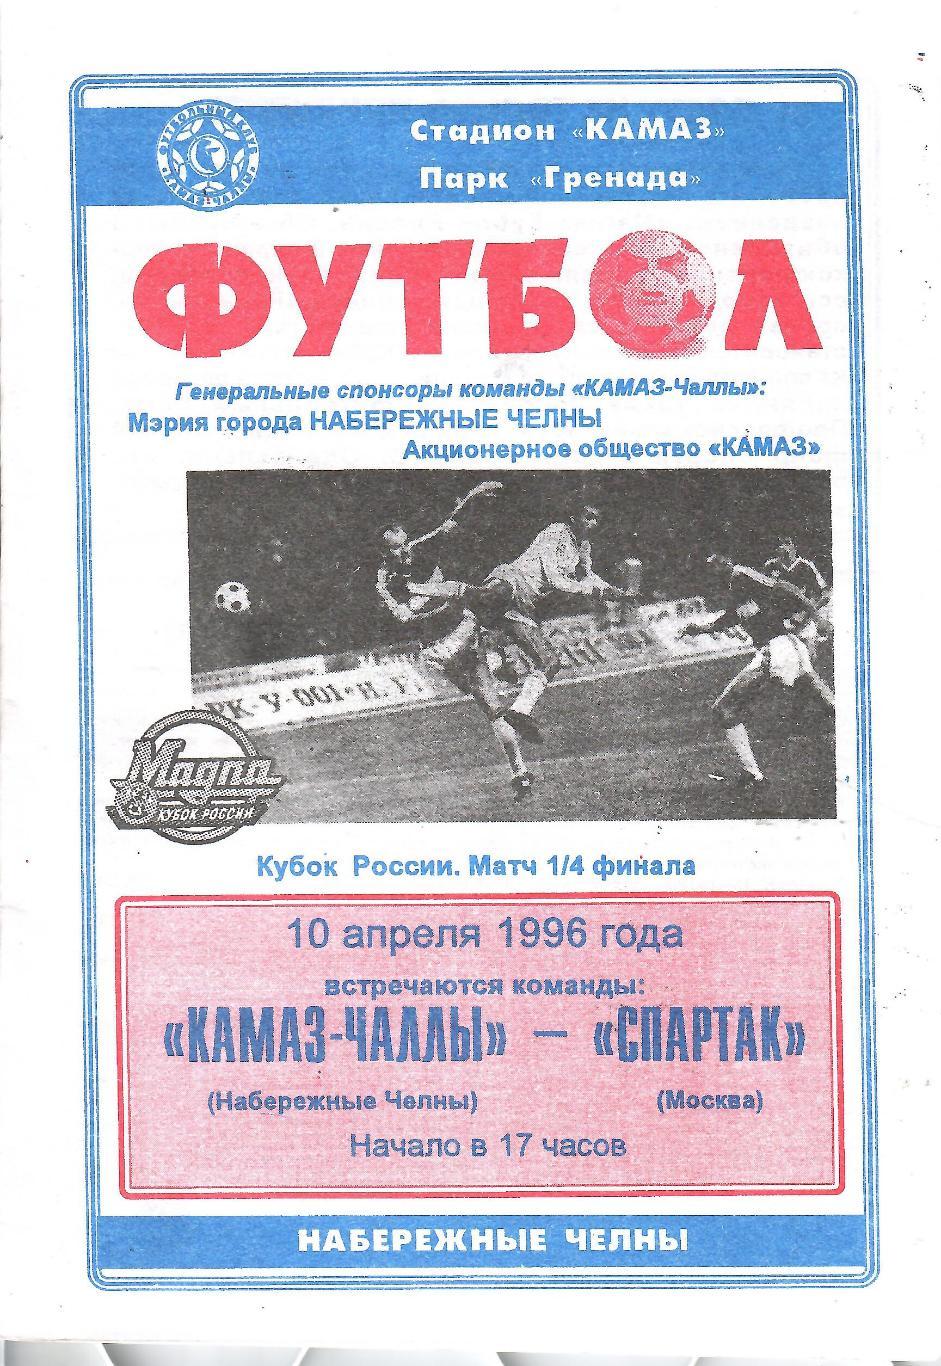 1996 КАМАЗ ЧАЛЛЫ - Спартак Москва Кубок России